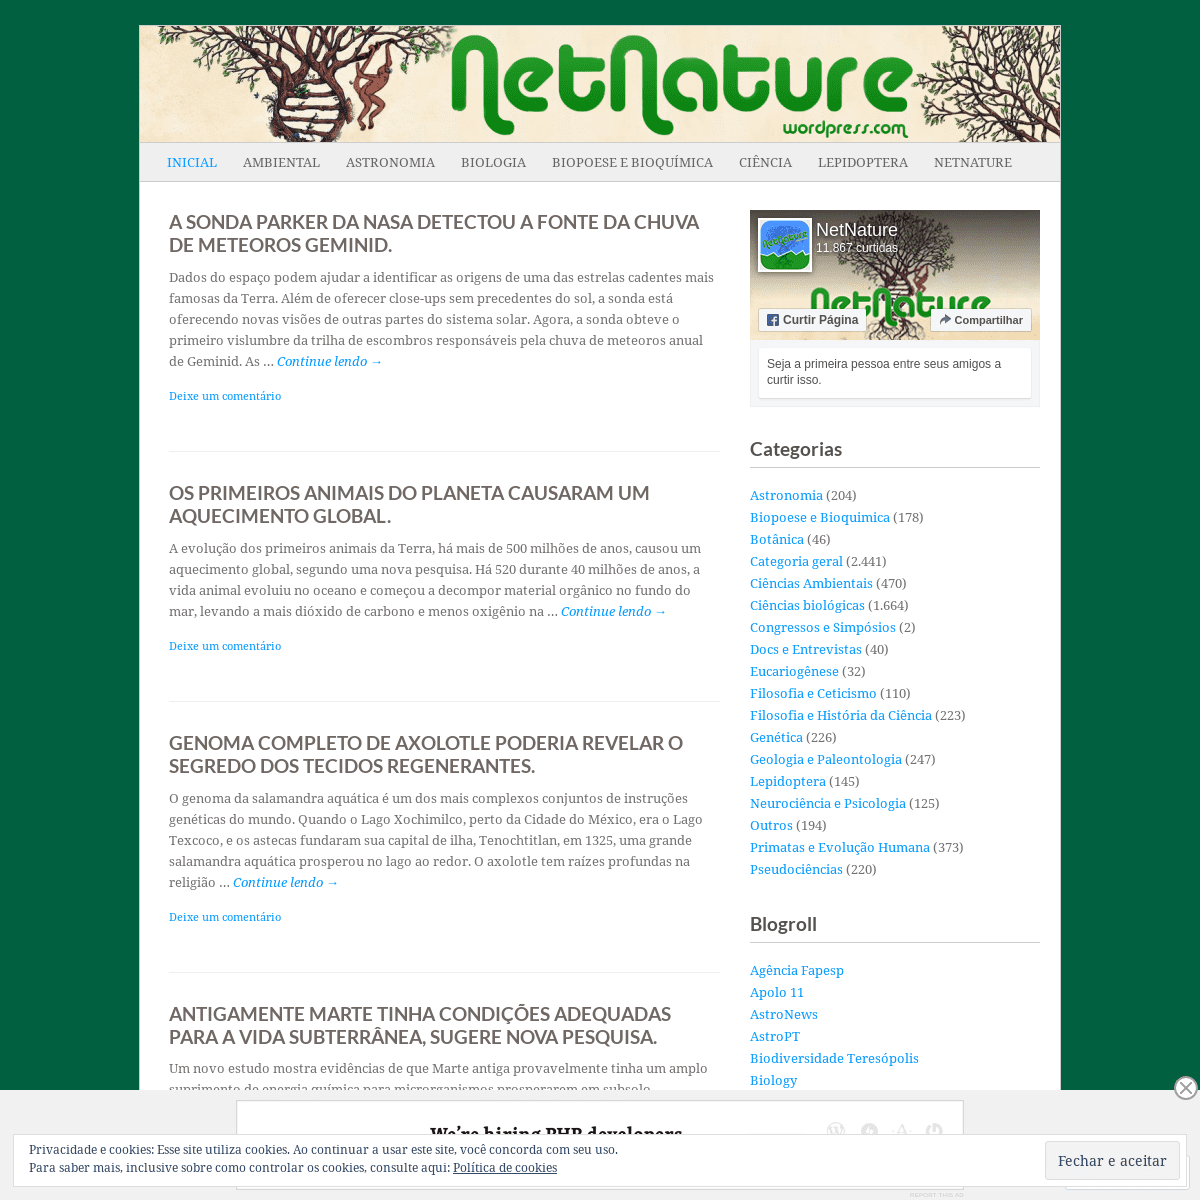 A complete backup of netnature.wordpress.com